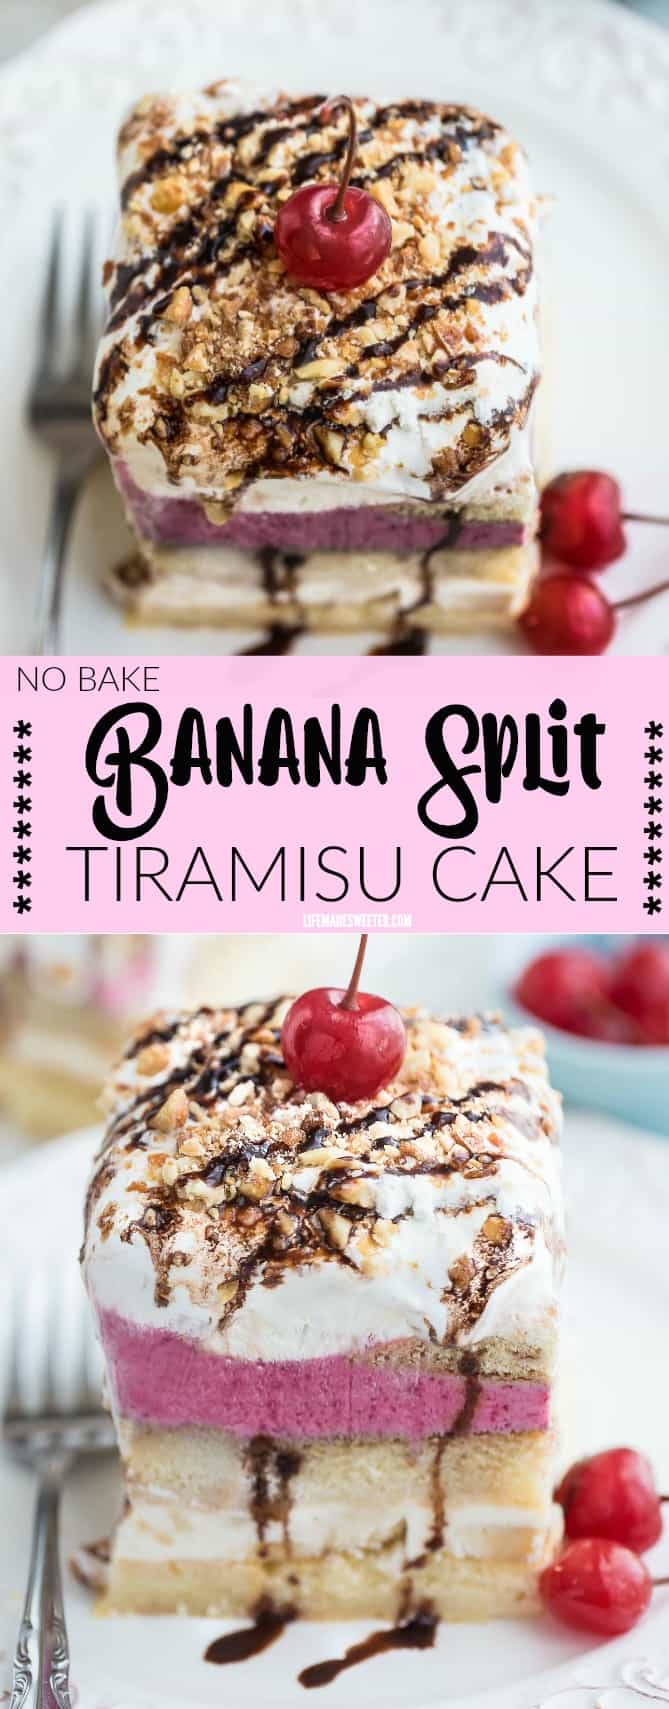  No Bake Banana Split Tiramisu Cake makes the perfect easy summer dessert!!